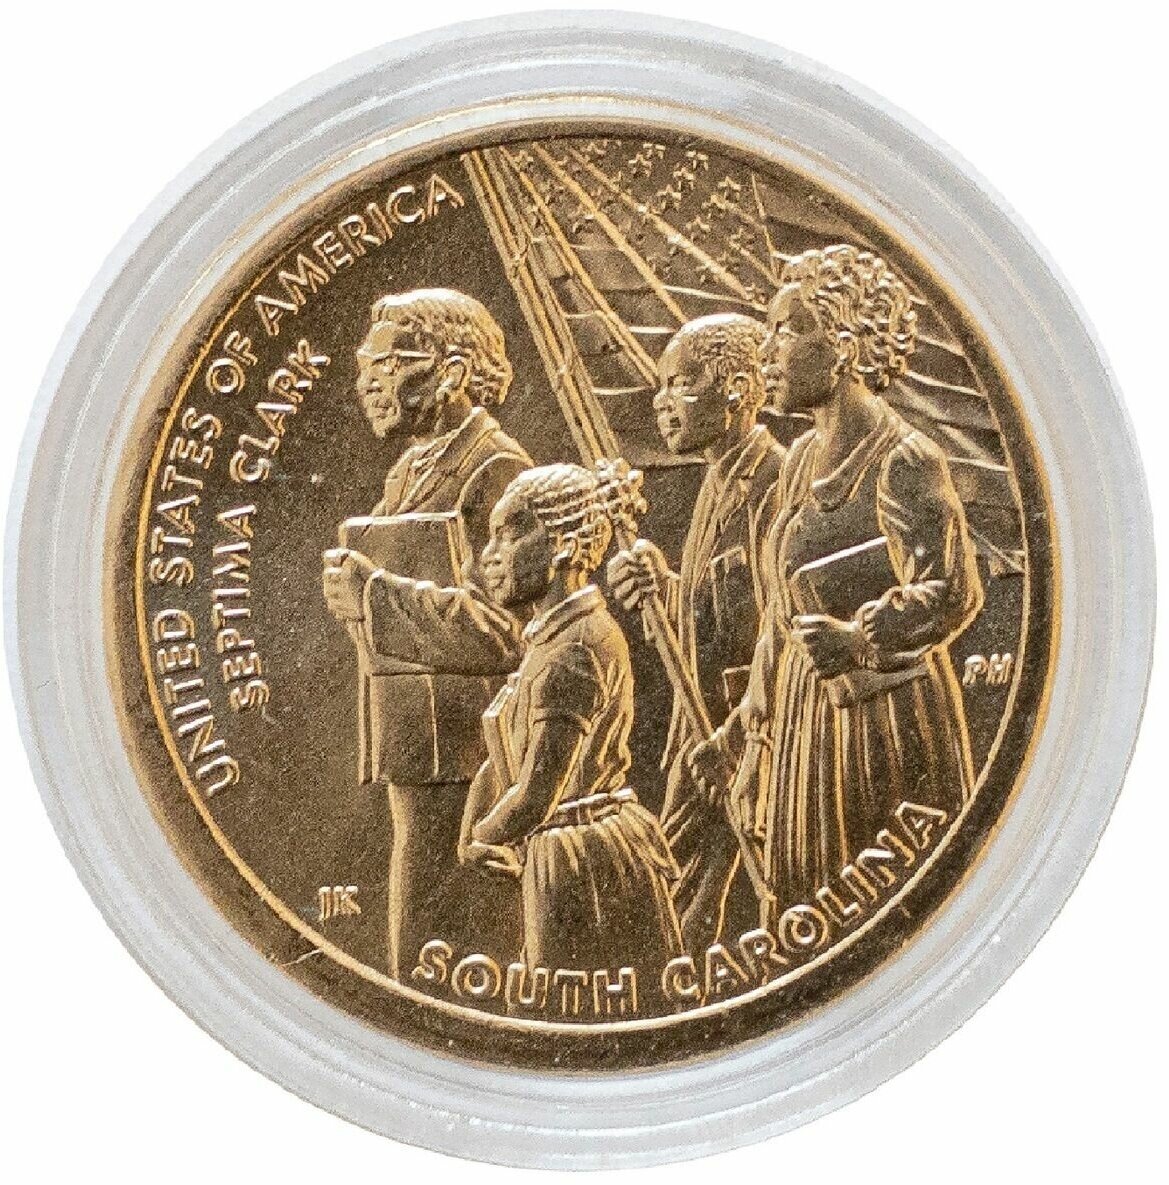 Монета 1 доллар США в капсуле Септима Кларк (Южная Каролина). D. США, 2020 г. в. UNC